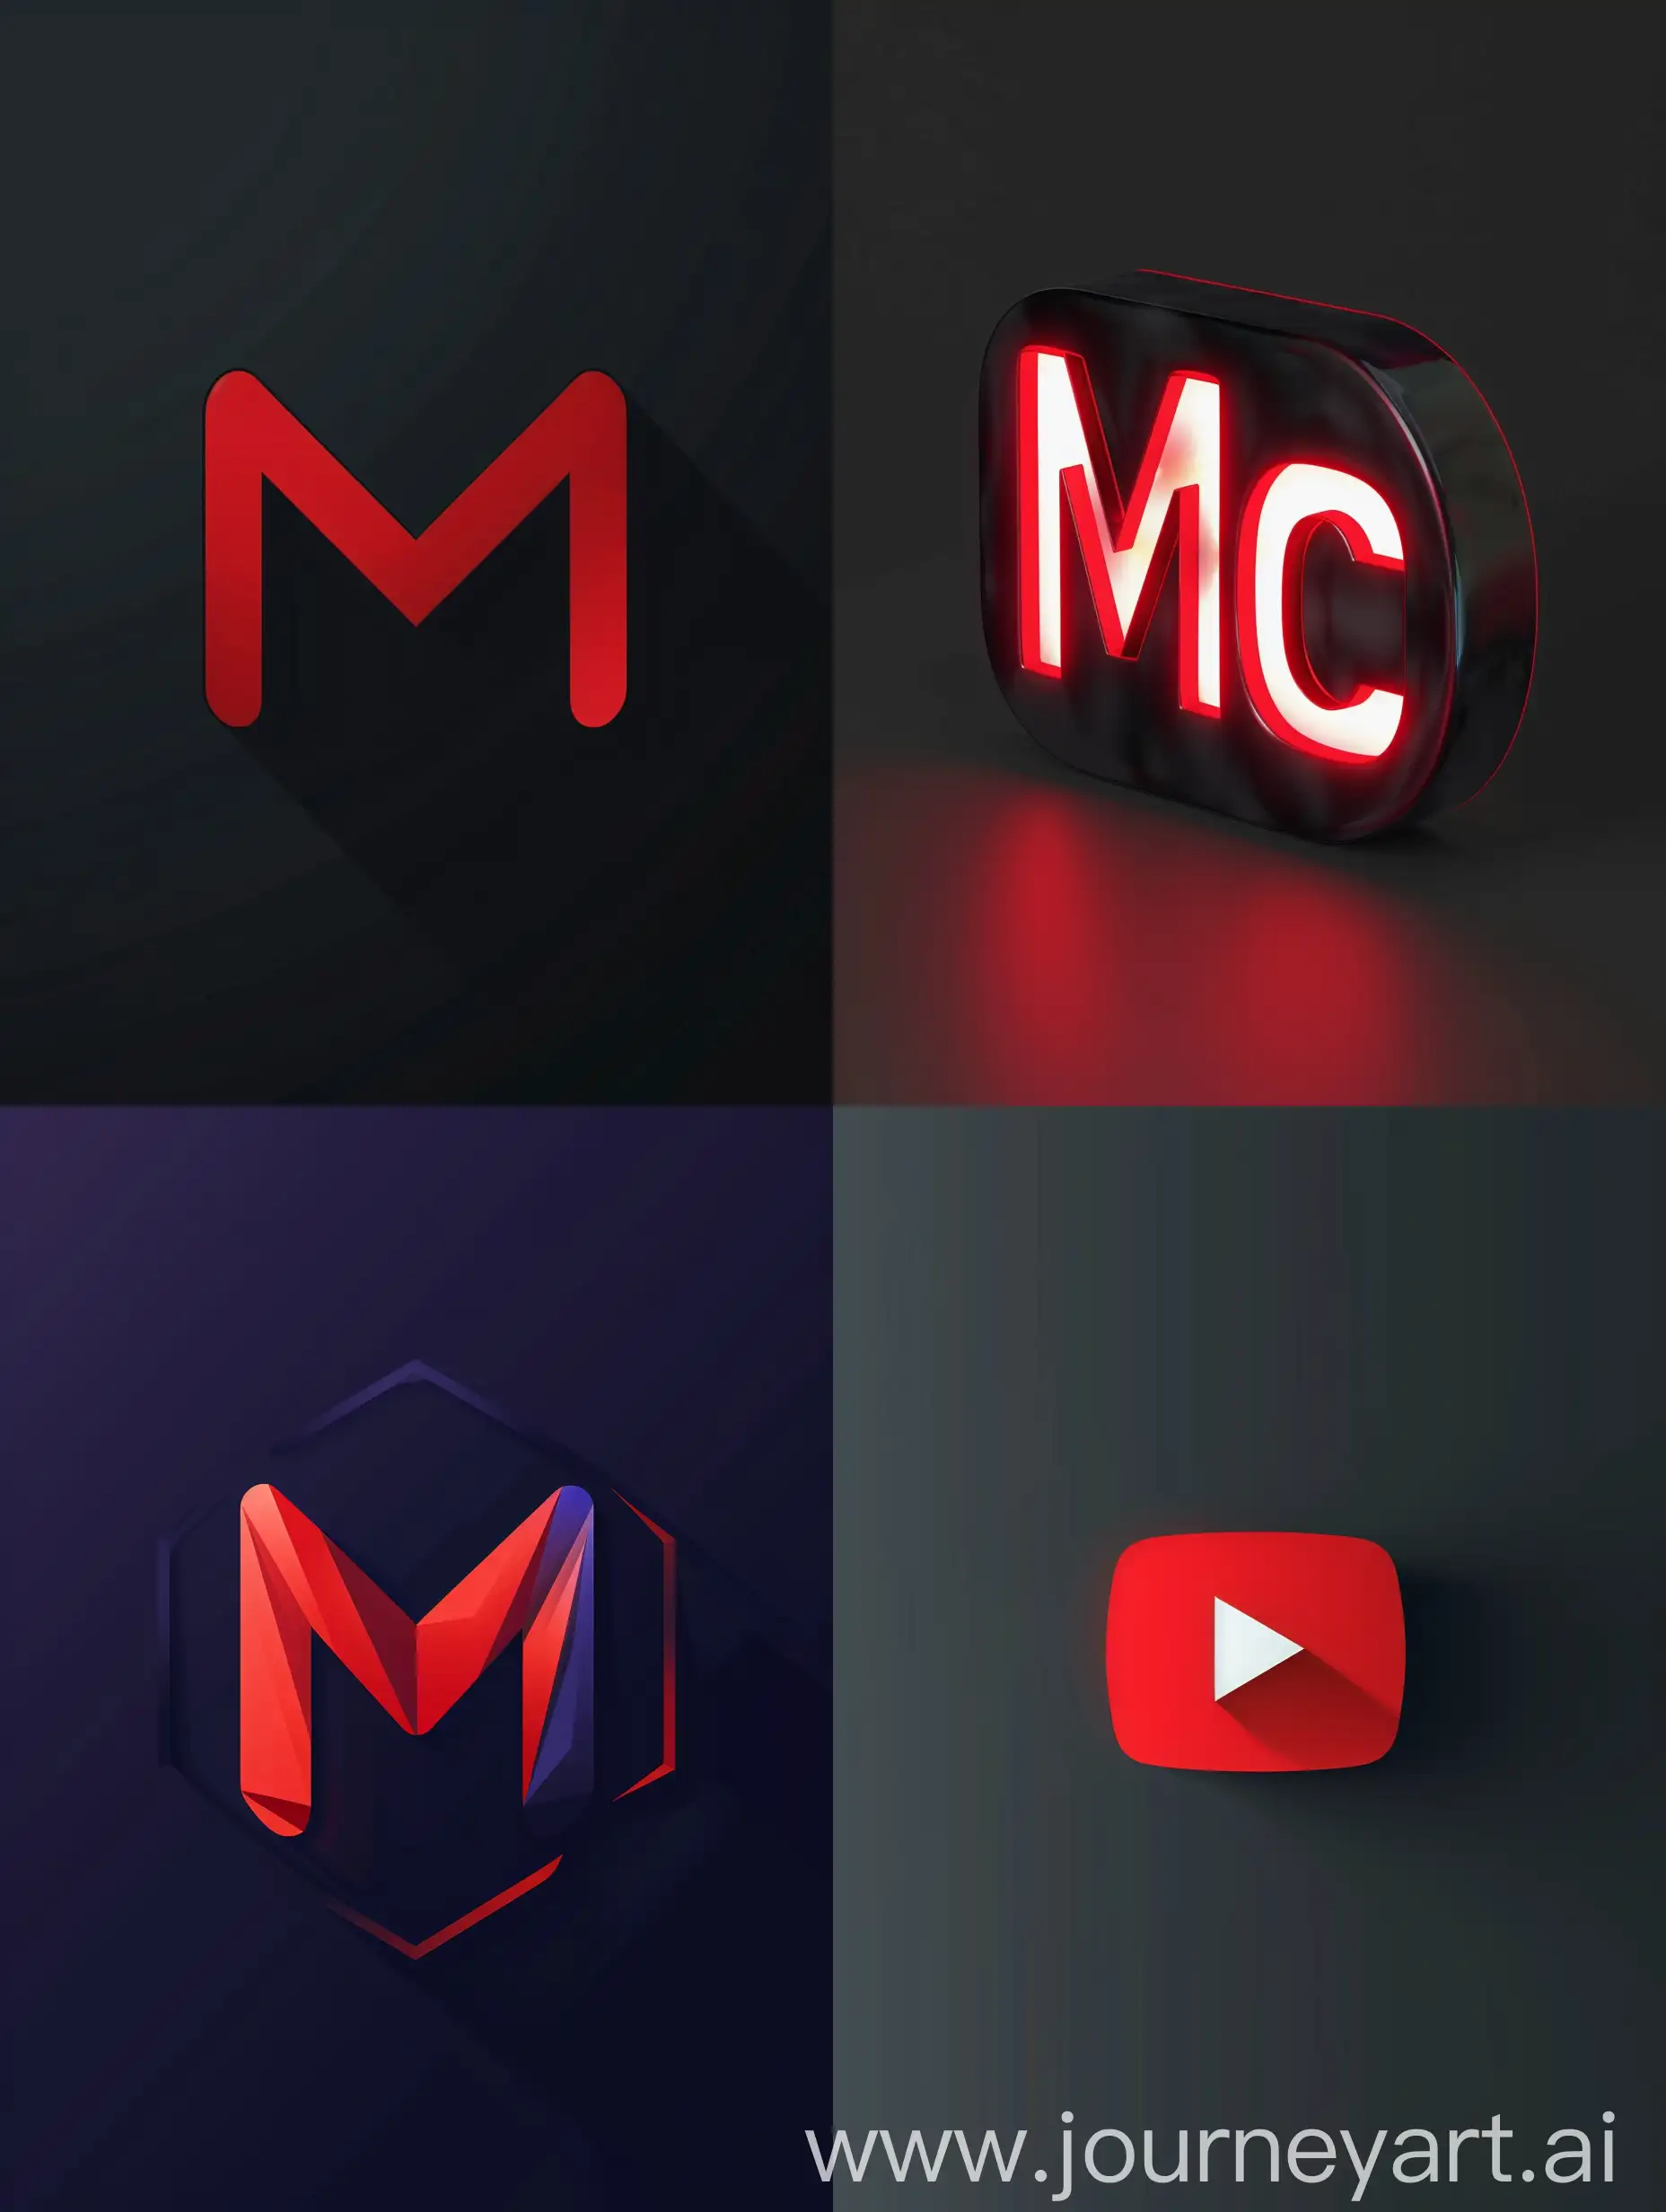 Give me professional youtube logo,with symbols M C